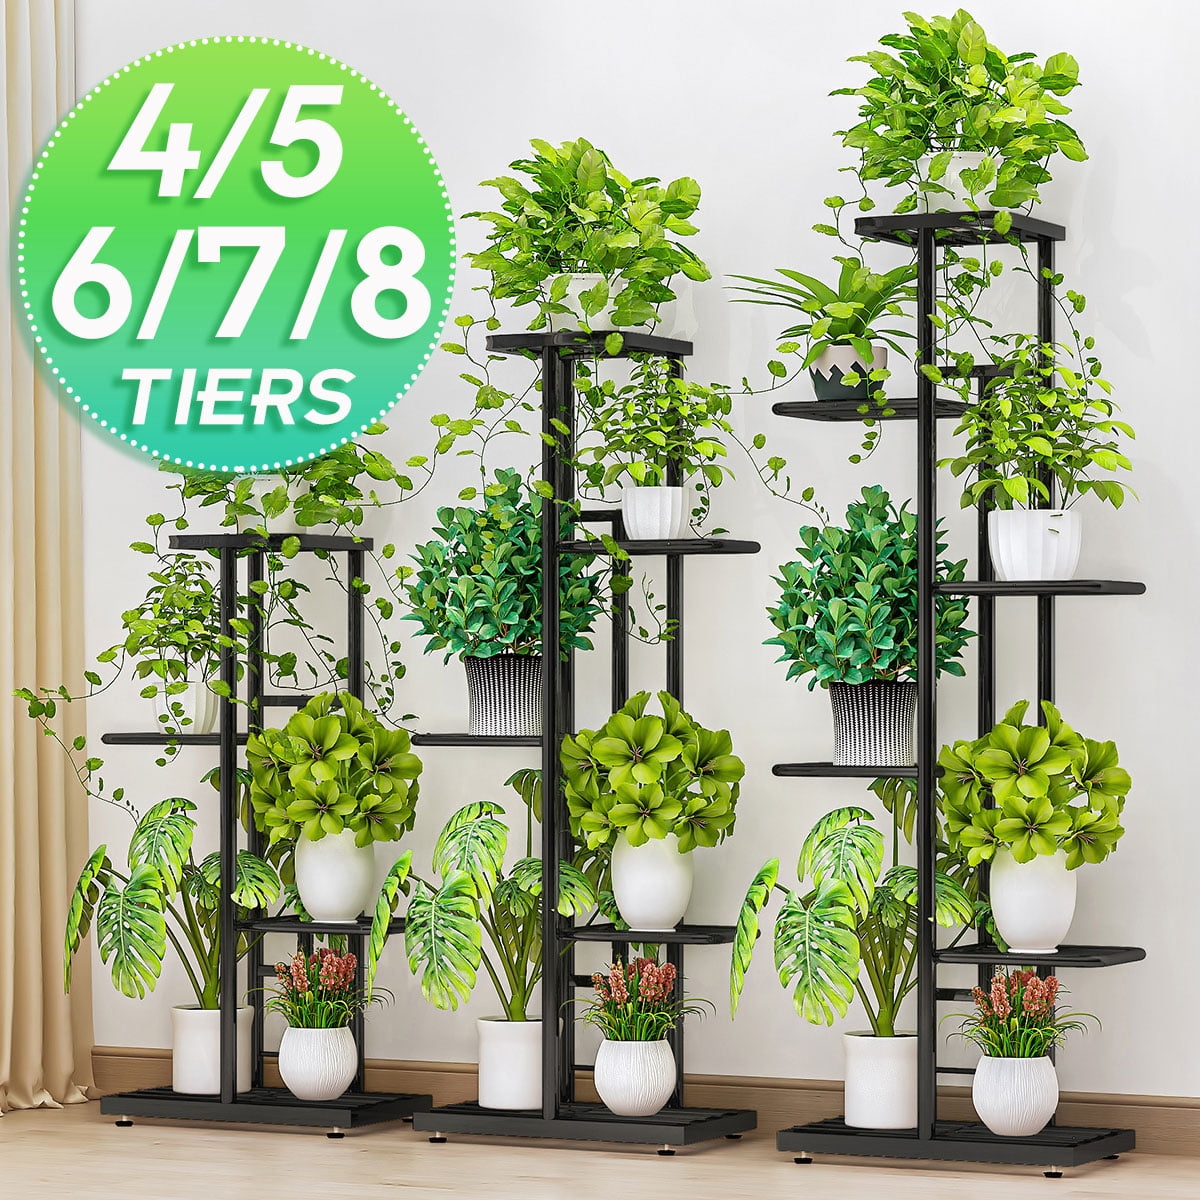 Details about   Metal Plant Pot Stand Indoor Garden Decor Flower Planter Display Holder Shelf 